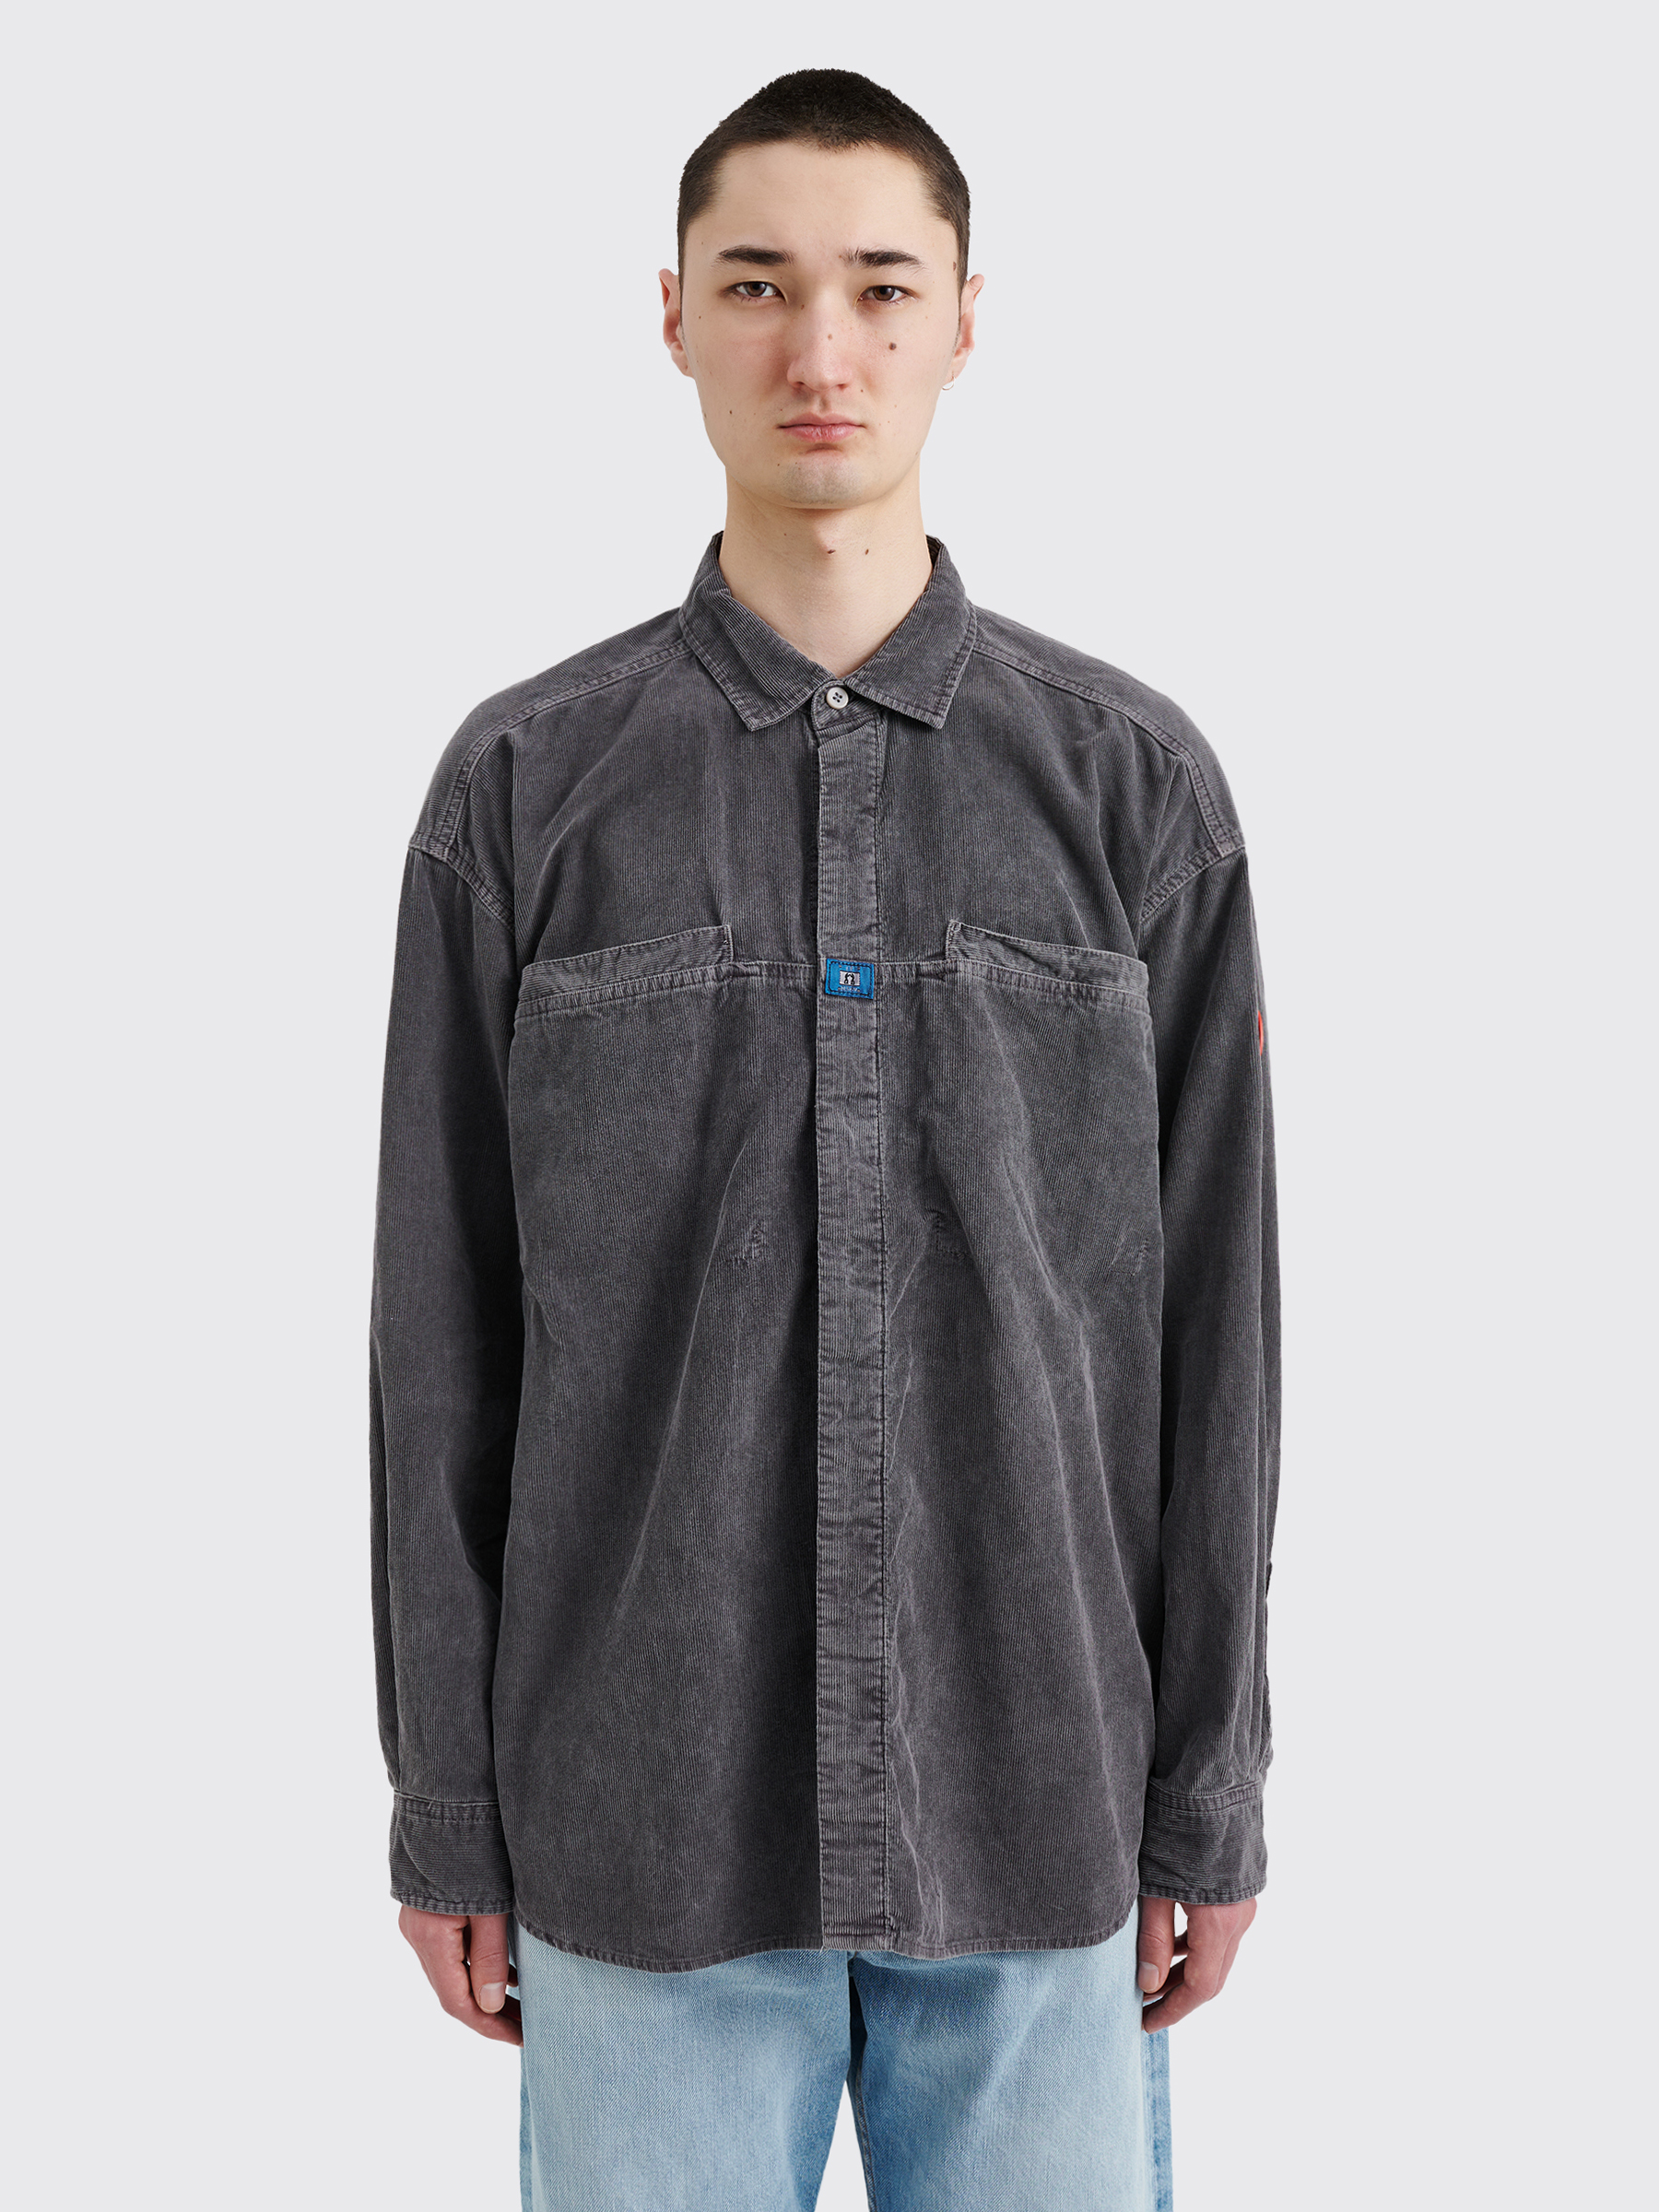 Cav Empt Overdye Cord Design Big Shirt Charcoal